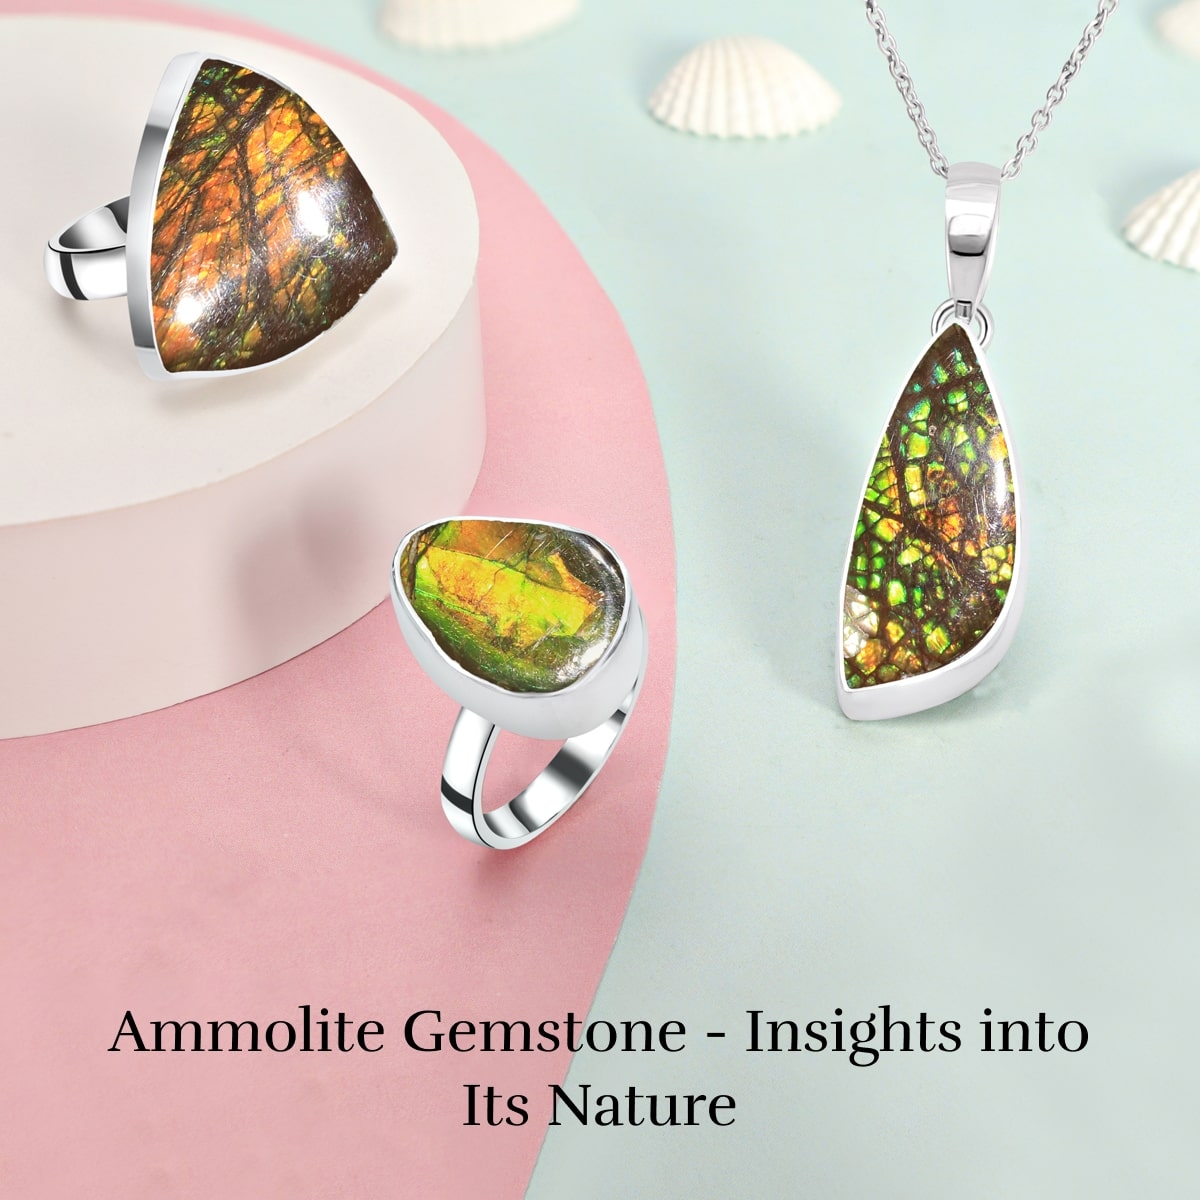 Gemstone Properties of Ammolite